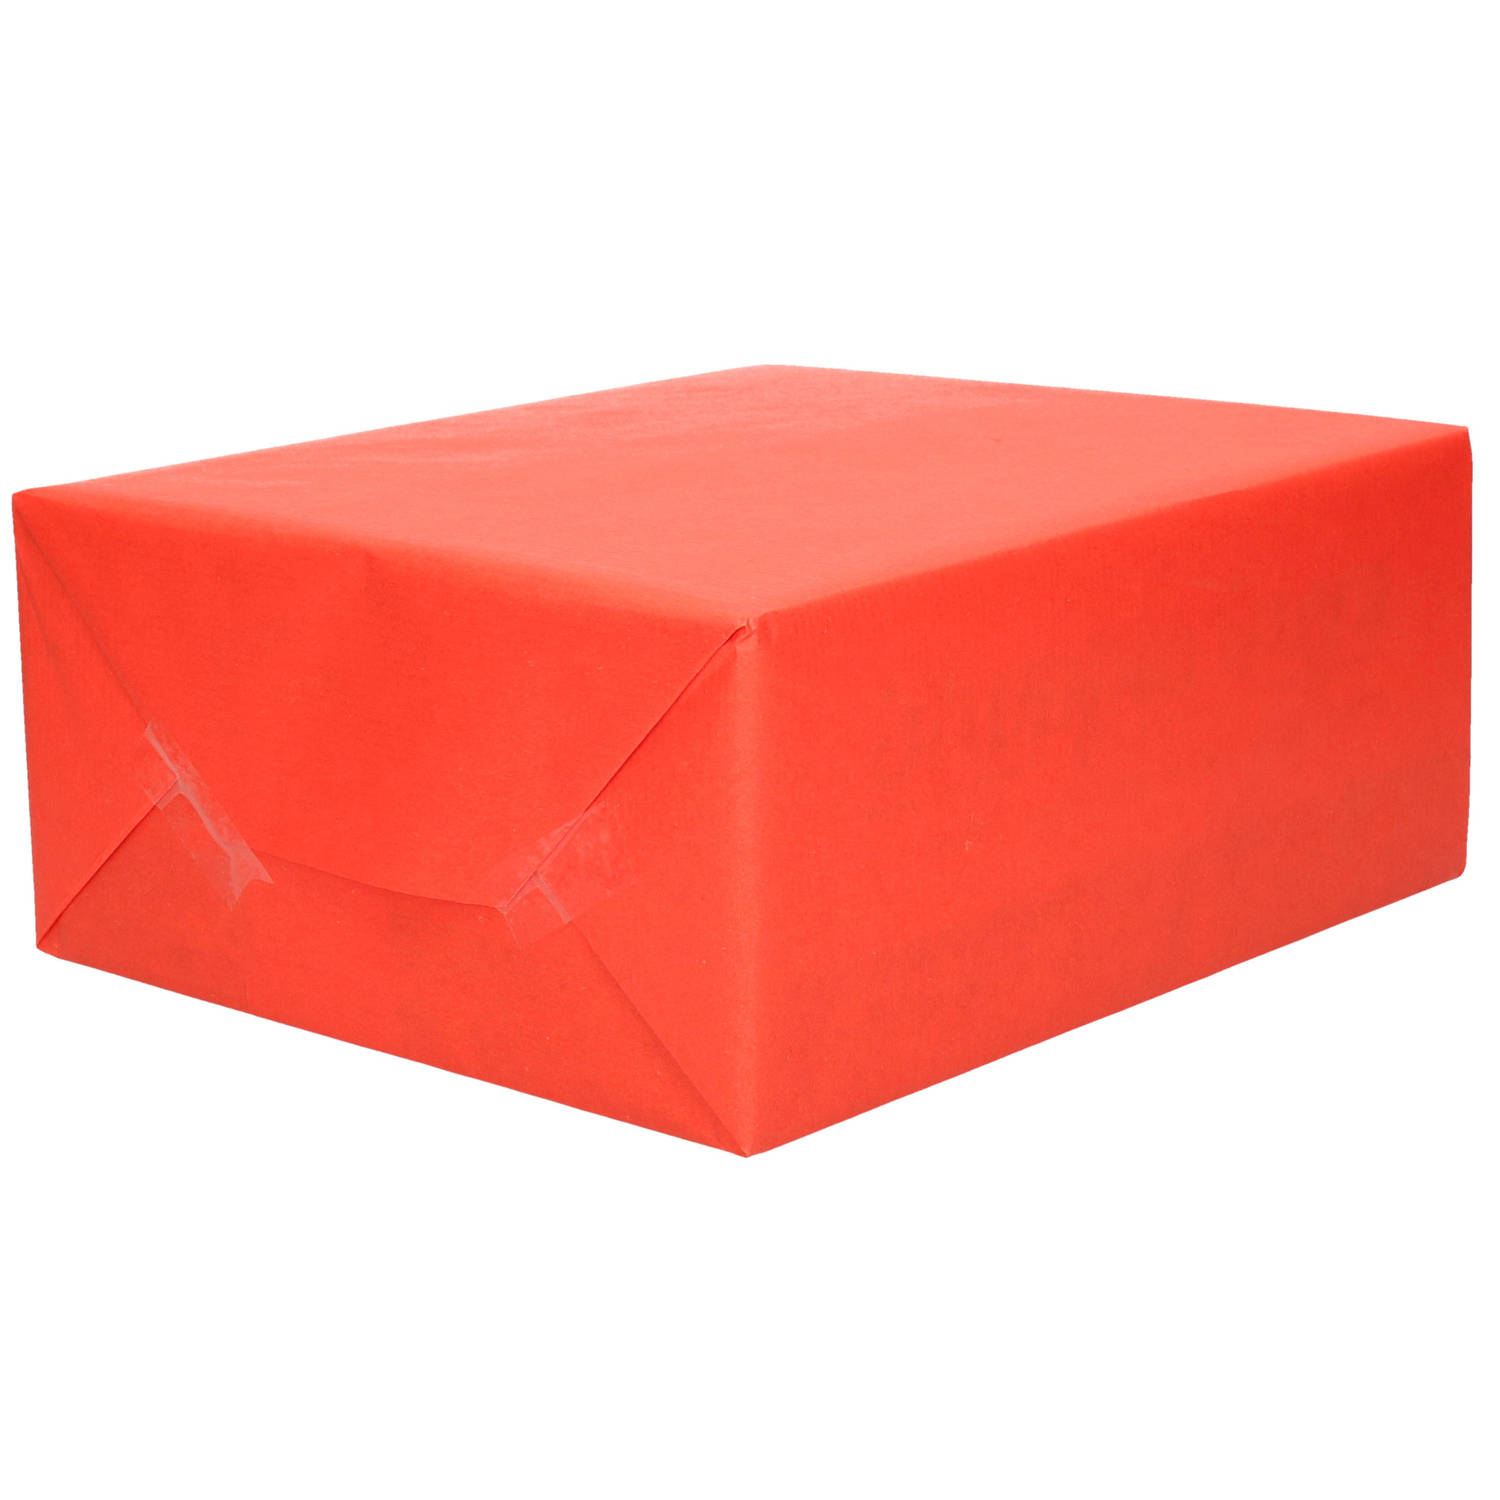 staking afbetalen Huh Kaft/inpakpapier - rood - 200 x 70 cm - cadeaupapier / kadopapier -  Cadeaupapier | Blokker